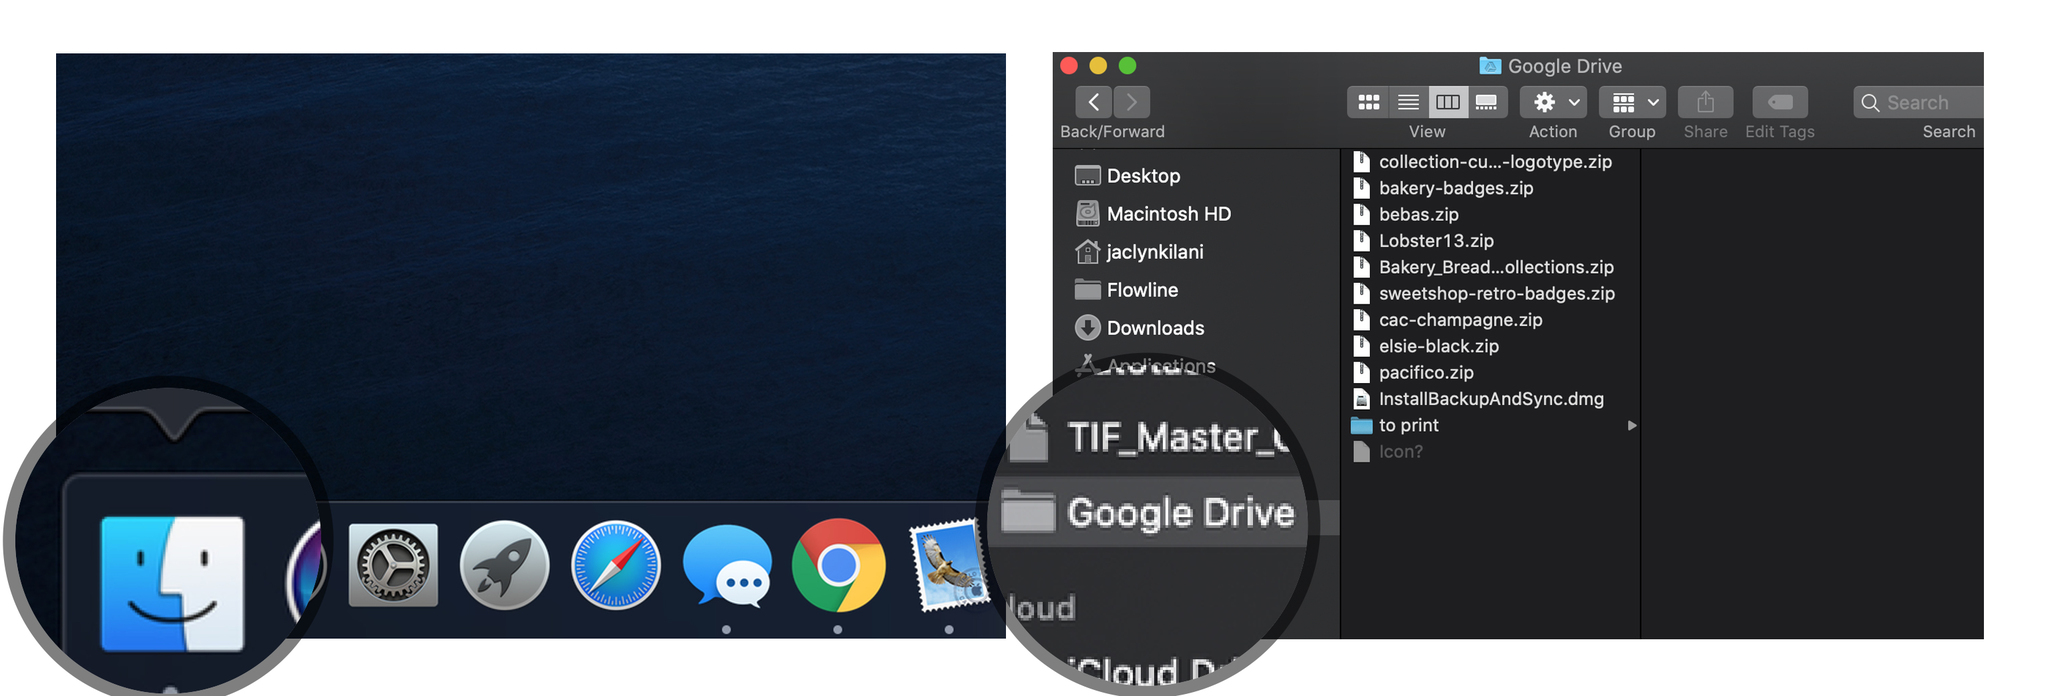 Move data: Open finder, locate Google Drive folder in sidebar.